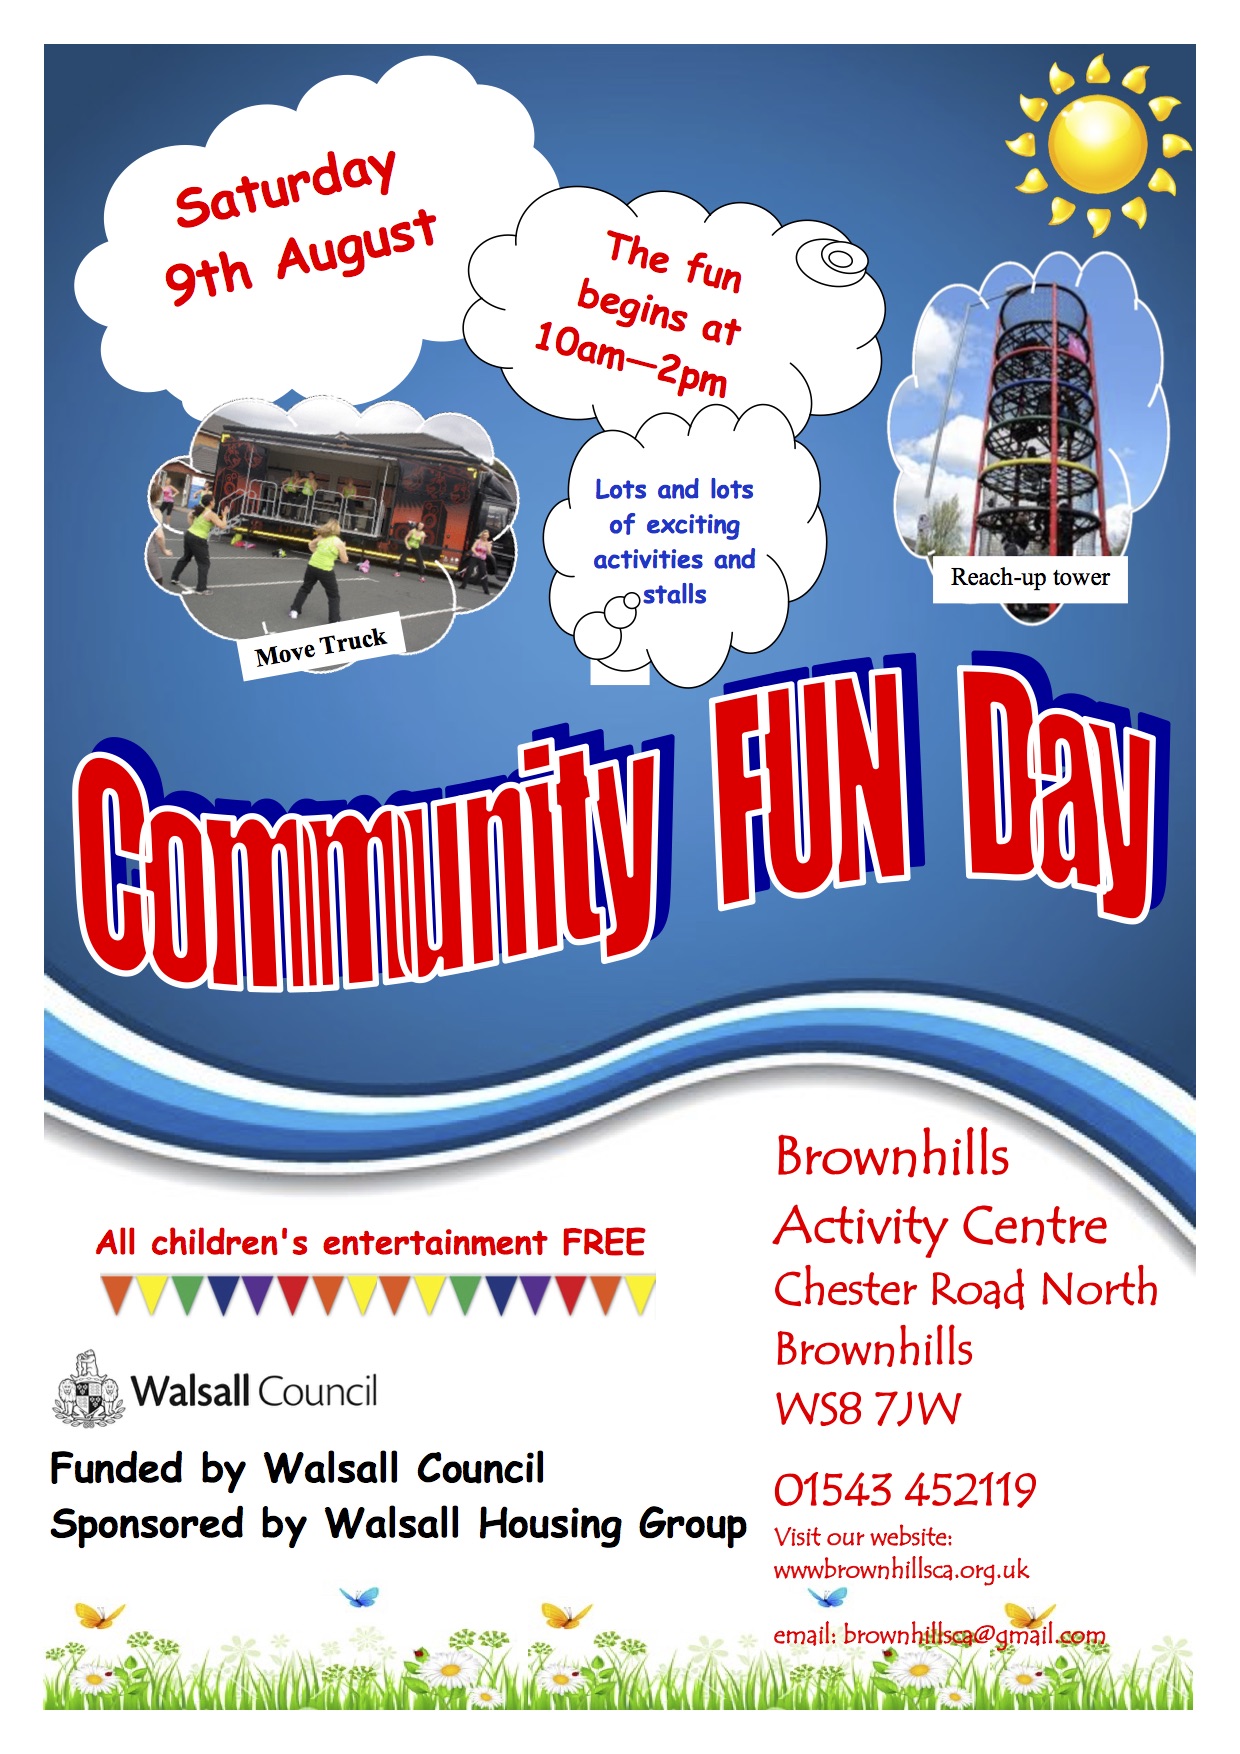 Brownhills Community Fun Day this Saturday!